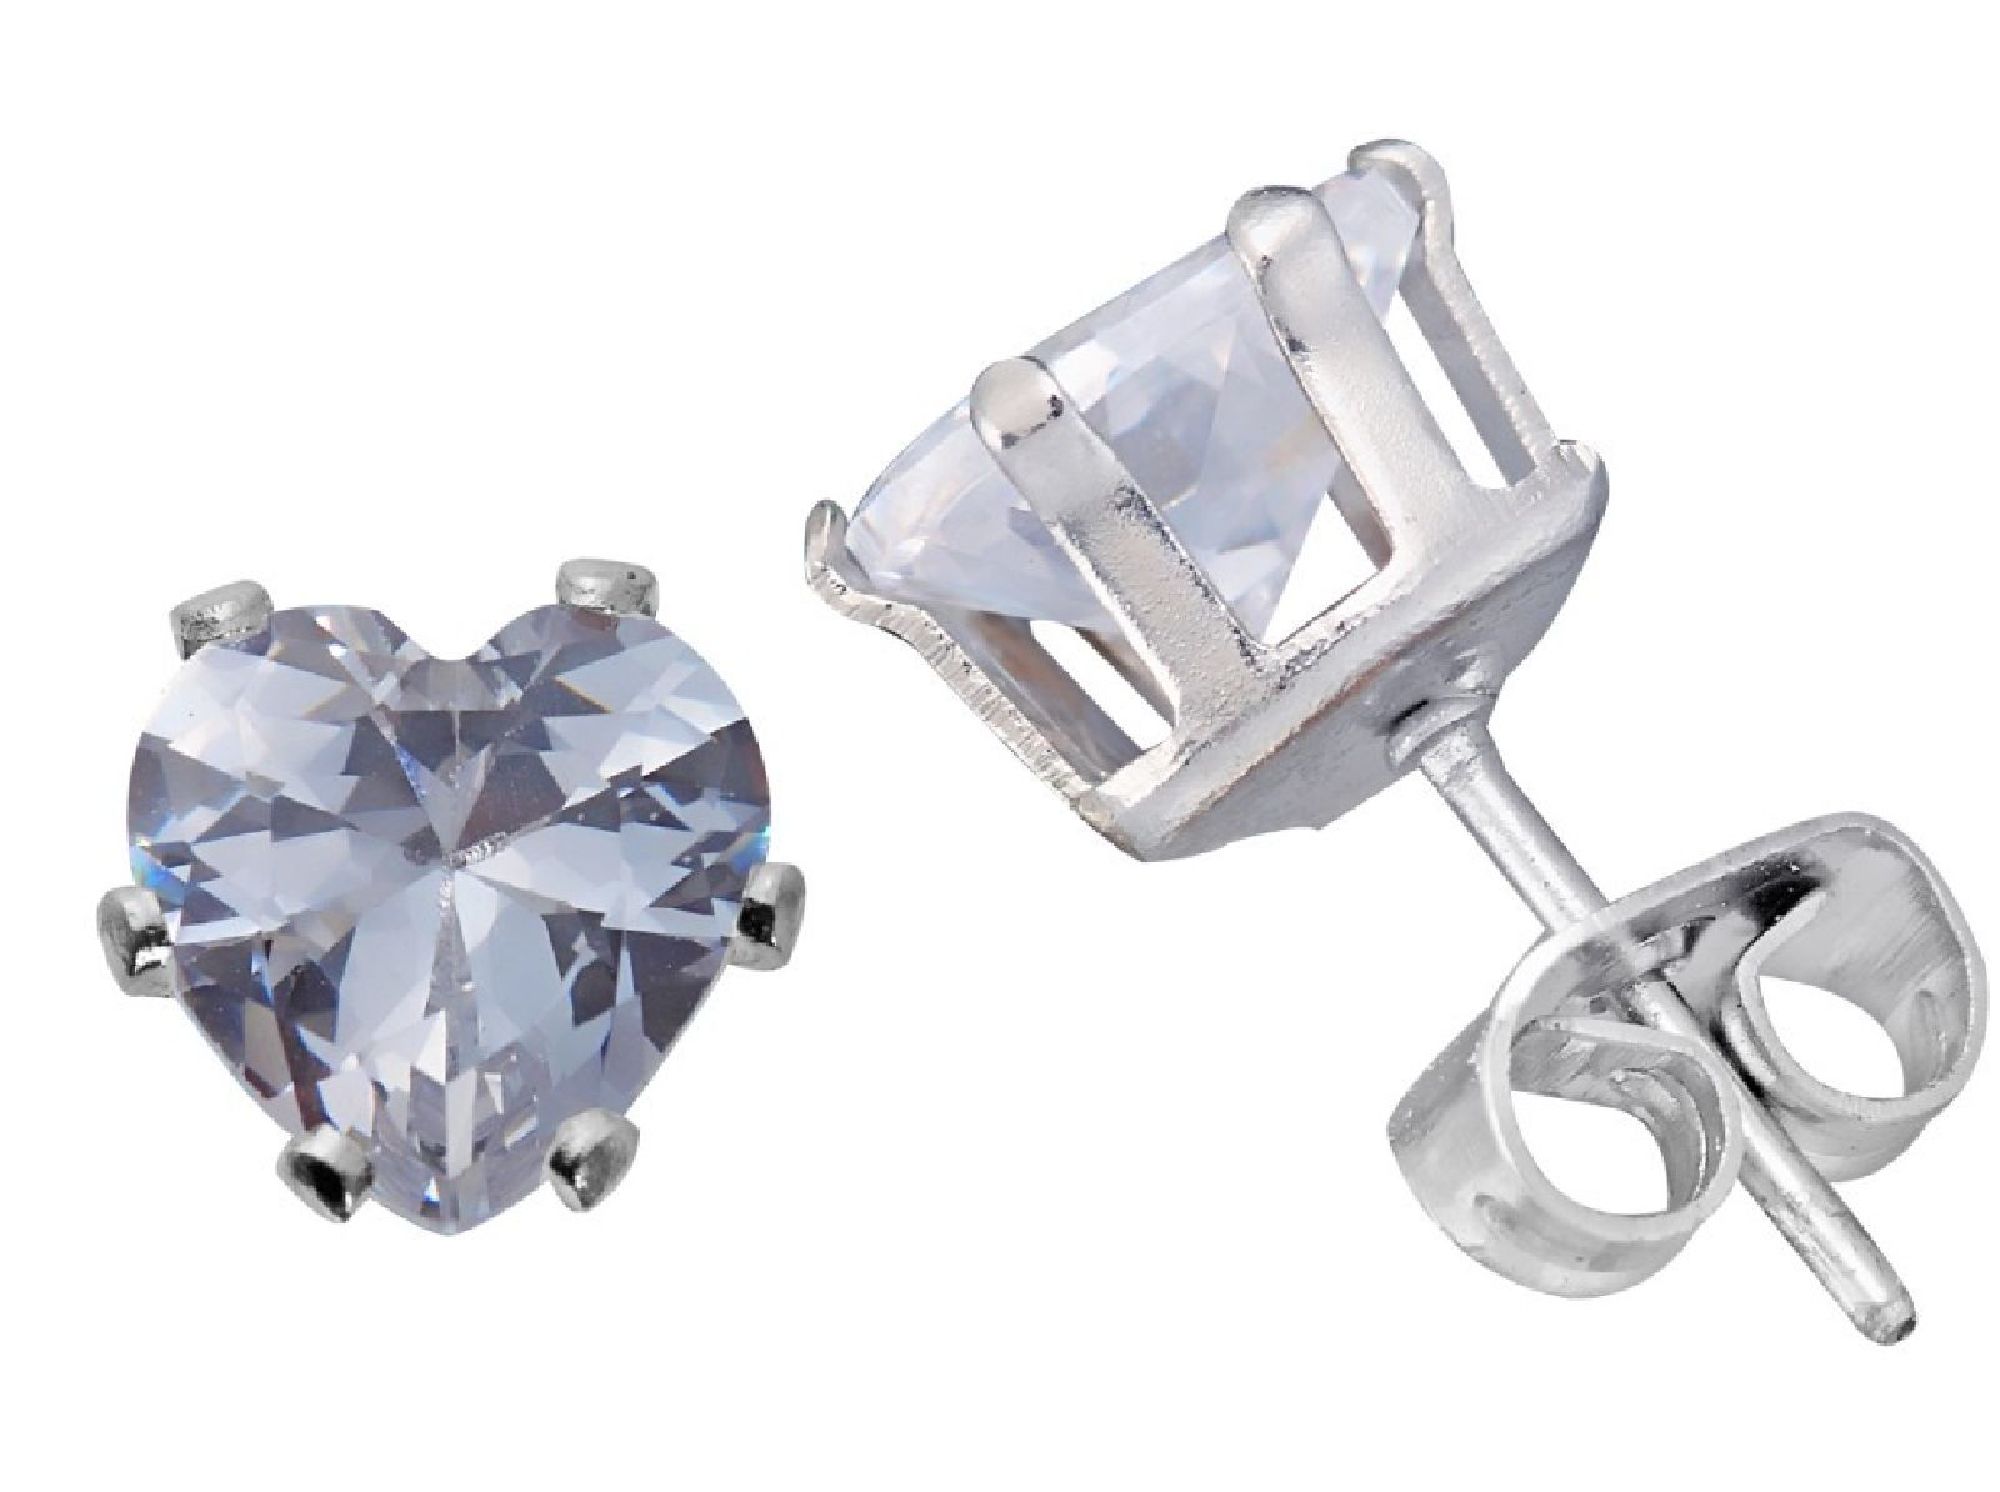 3 Carat Heart Shape White Diamond manmade Stud Earrings for Woman in Sterling Silver Designed in France